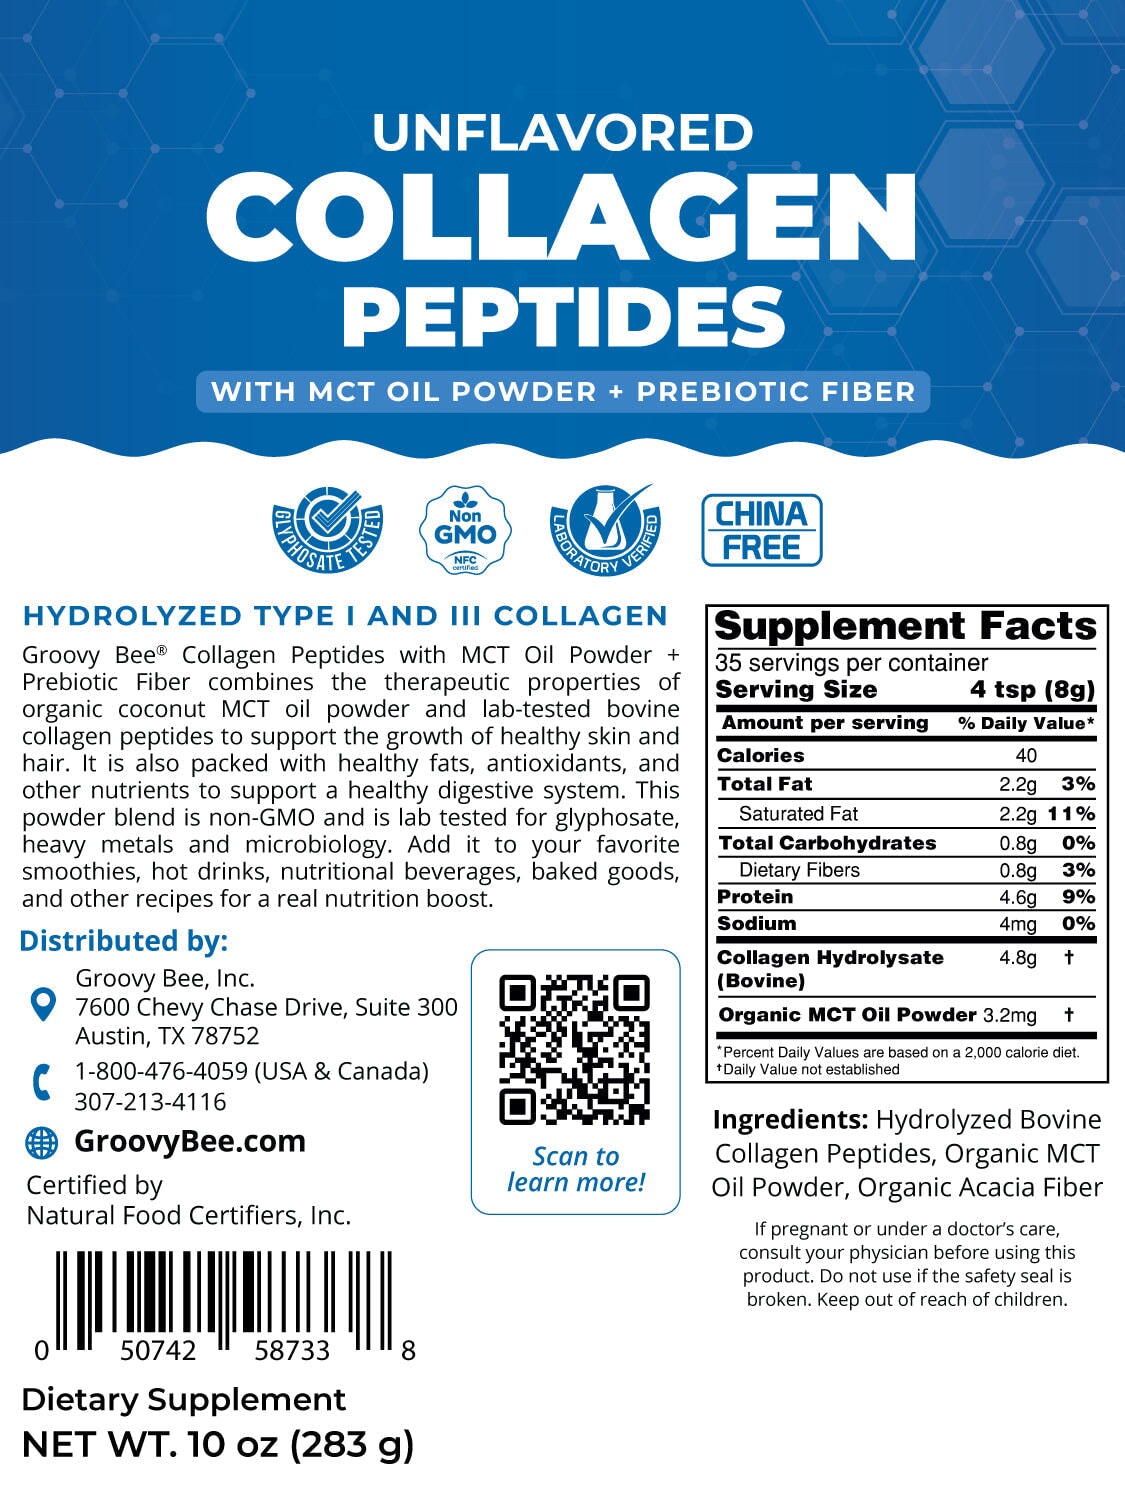 Collagen Peptides + MCT Oil Powder + Prebiotic Fiber - Unflavored 10 oz (283g) Supplements Brighteon Store 